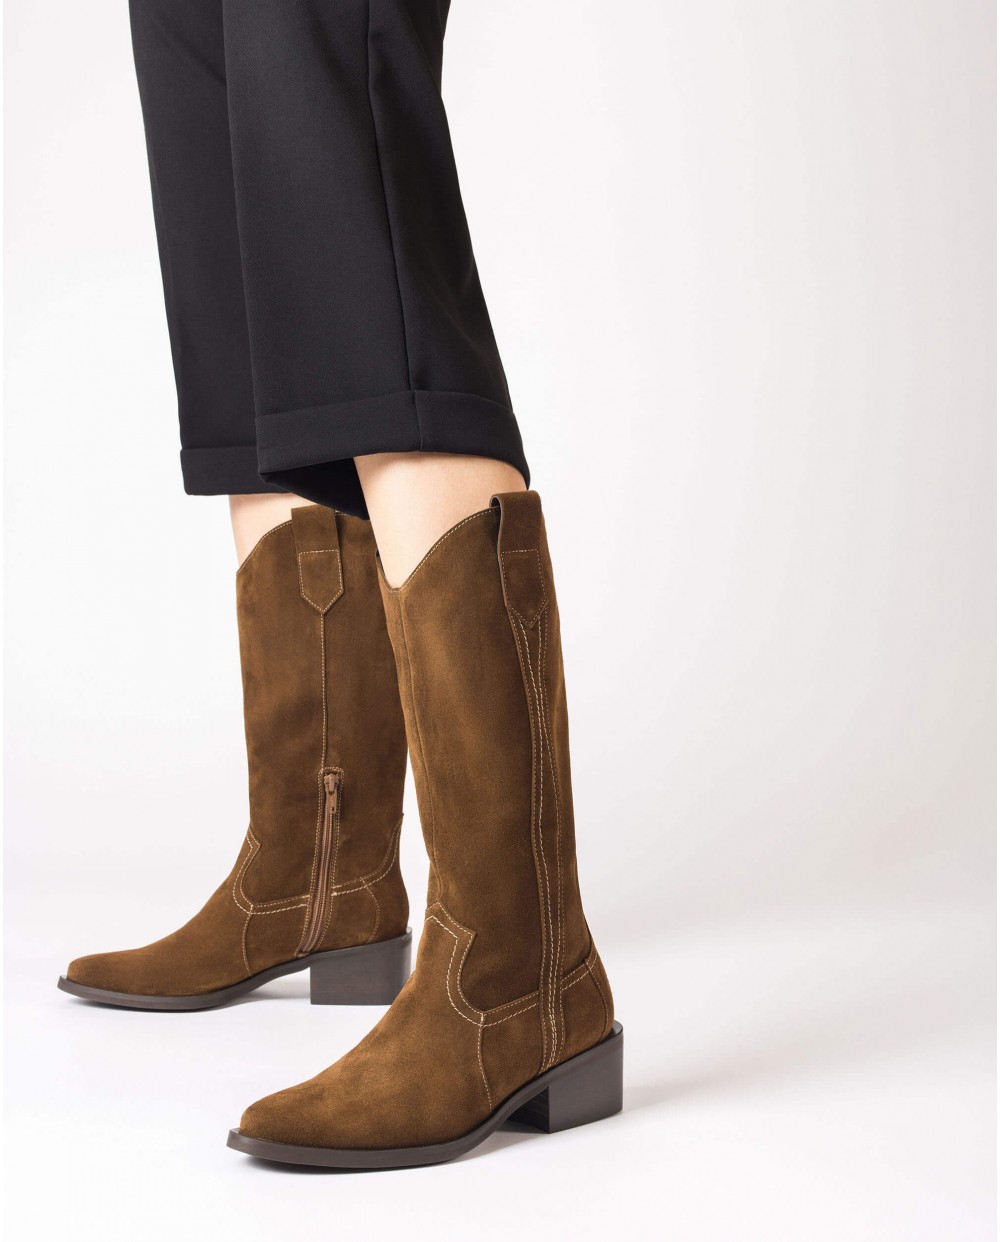 Wonders-Boots-Brown SANDRA boot